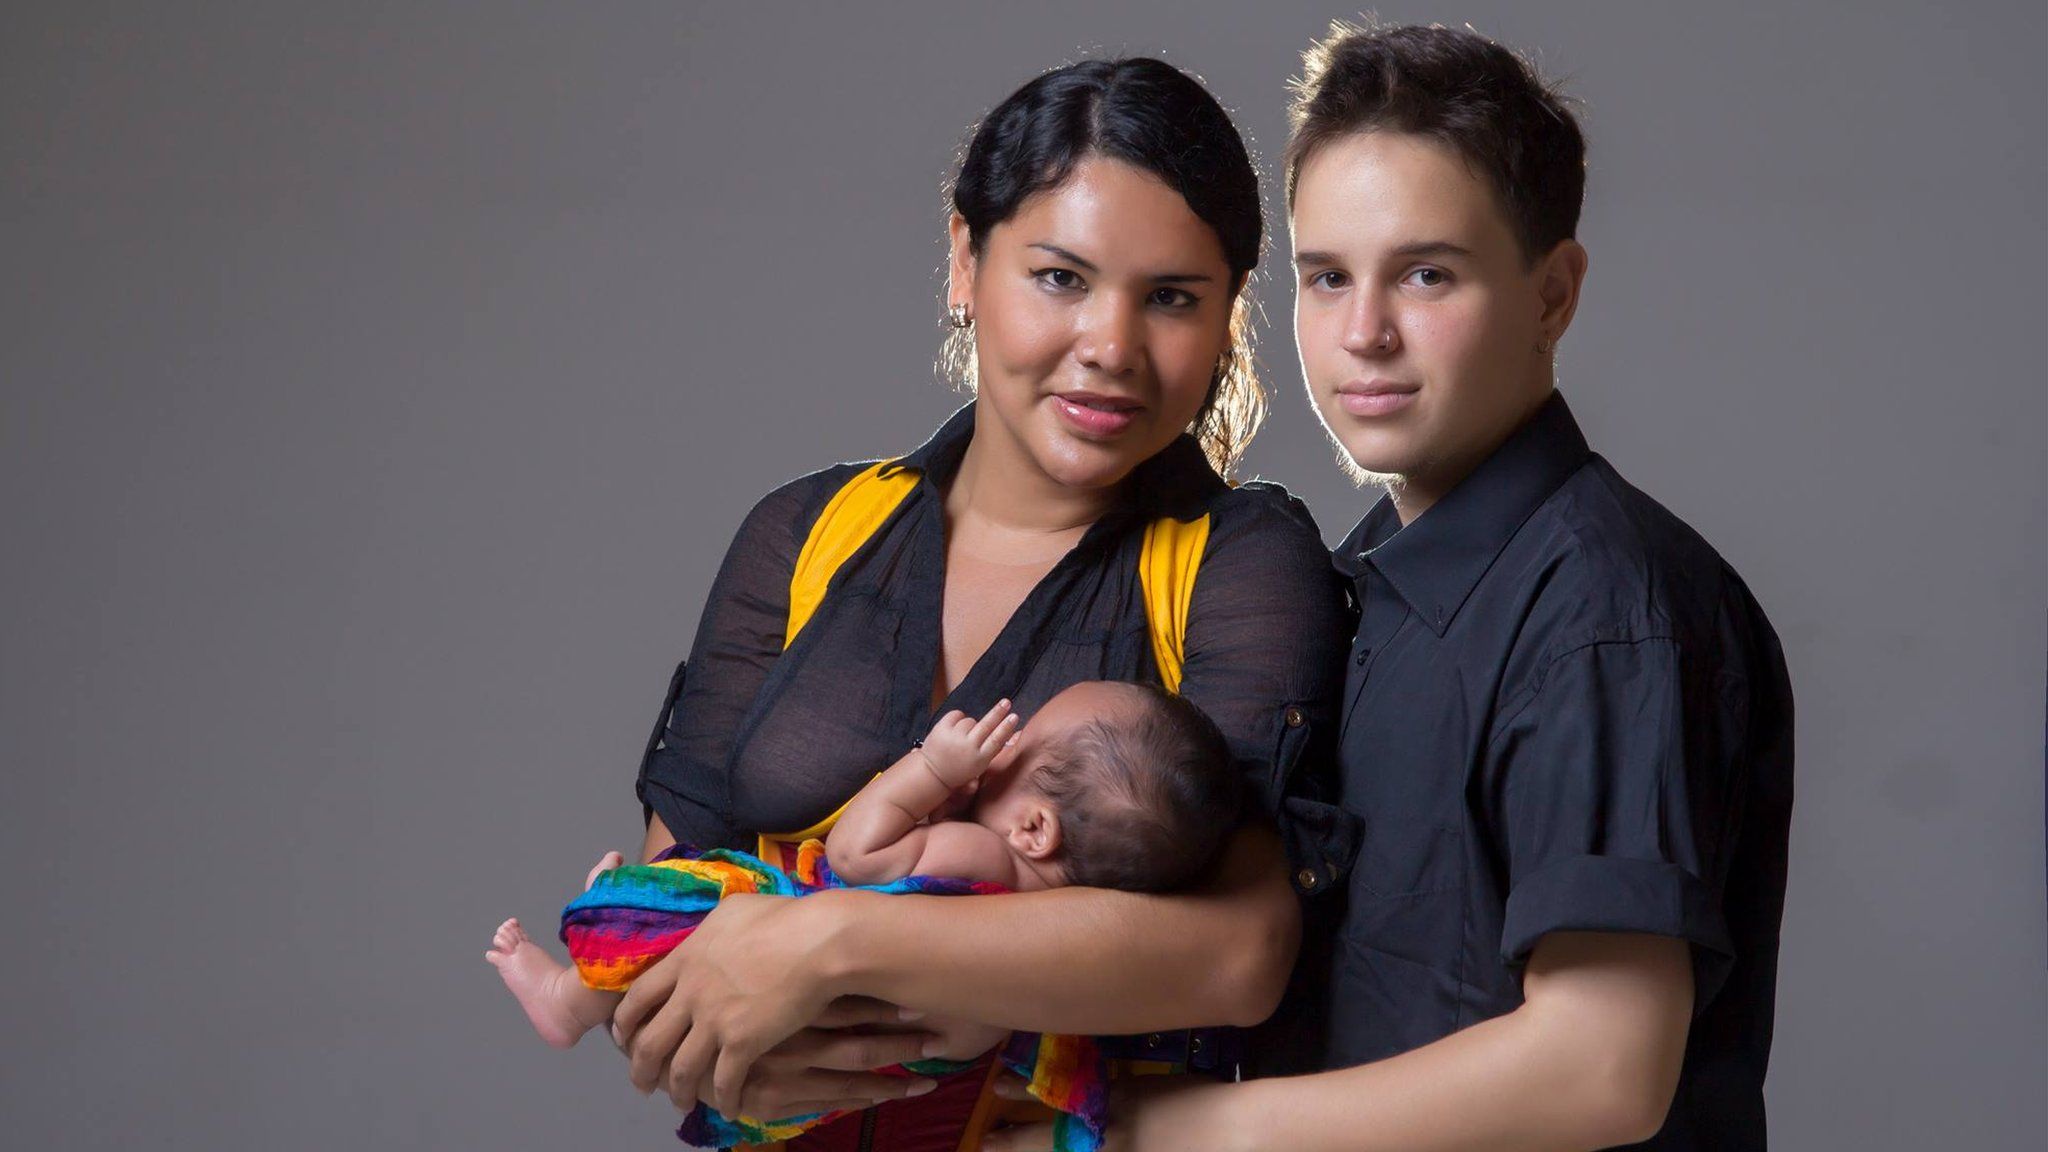 Diane and Fernando, Ecuador's most famous transgender couple